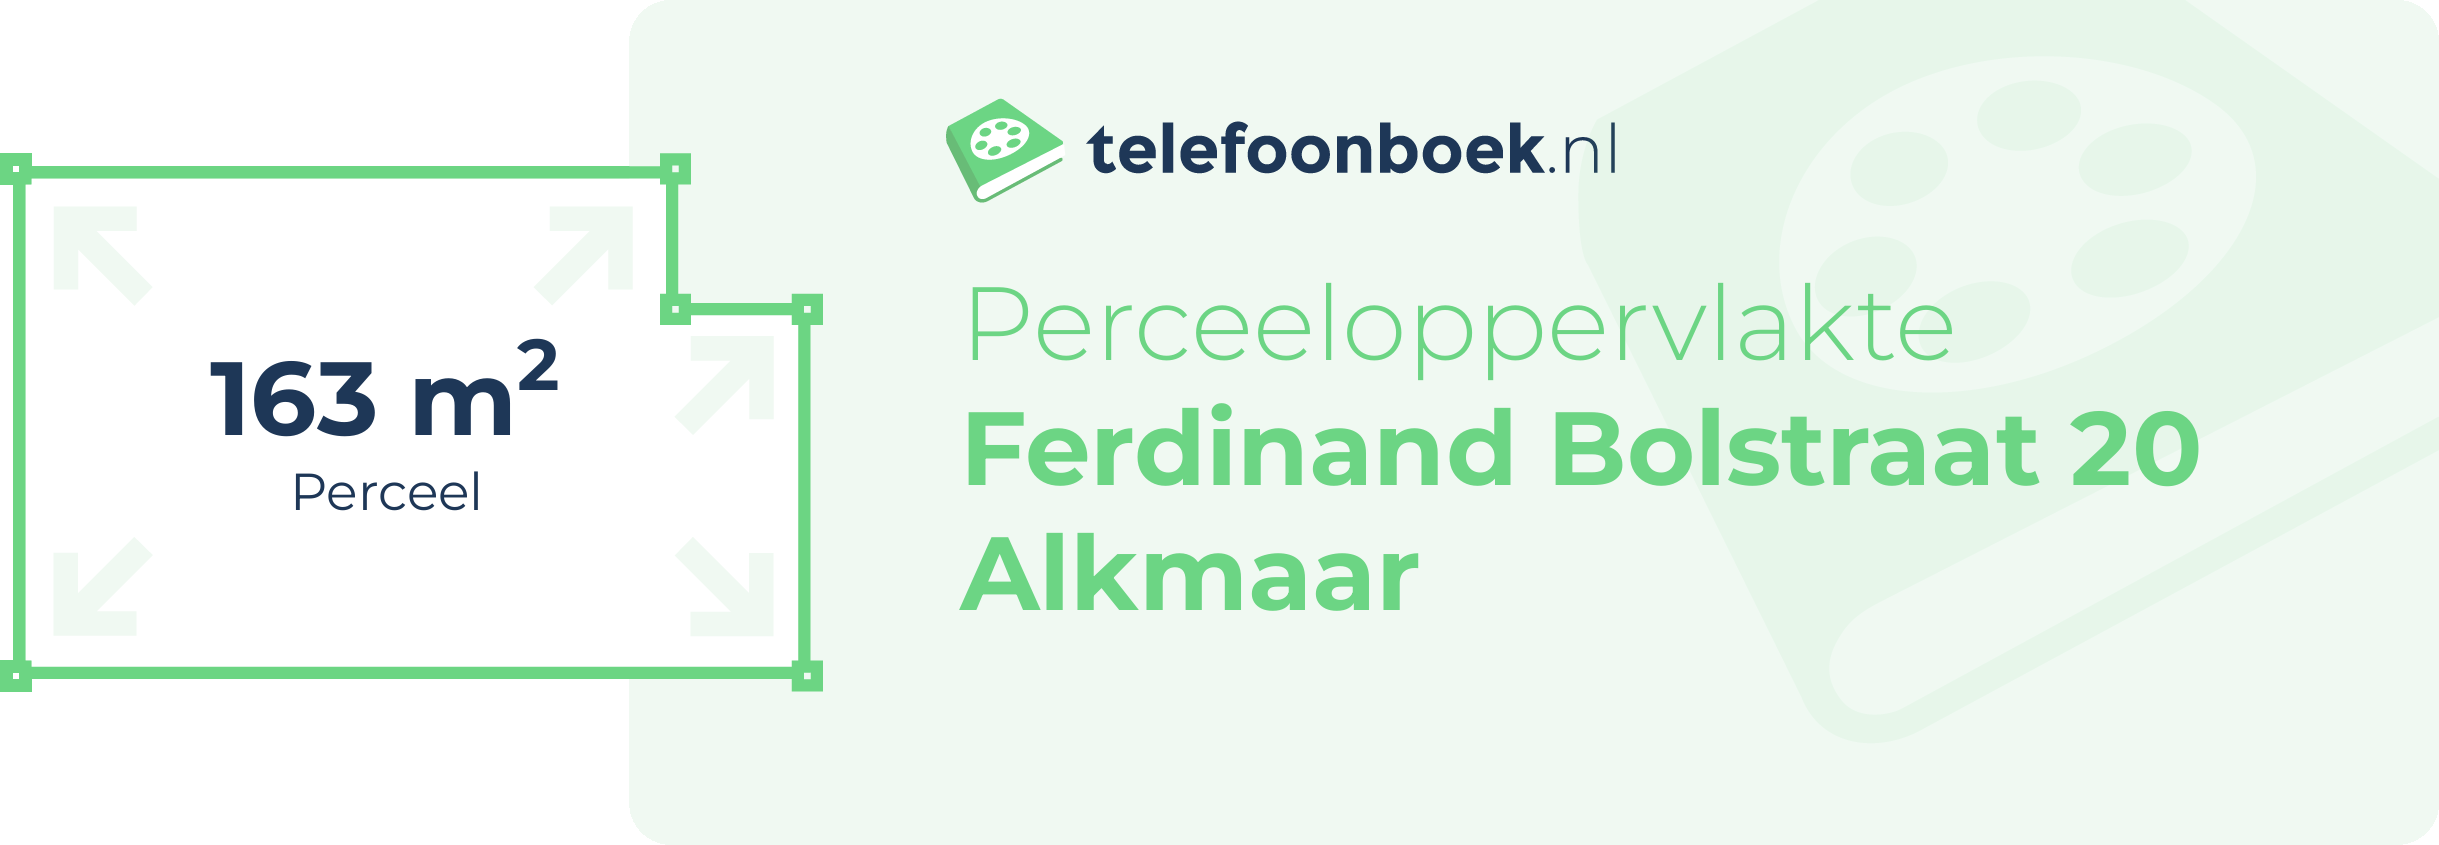 Perceeloppervlakte Ferdinand Bolstraat 20 Alkmaar